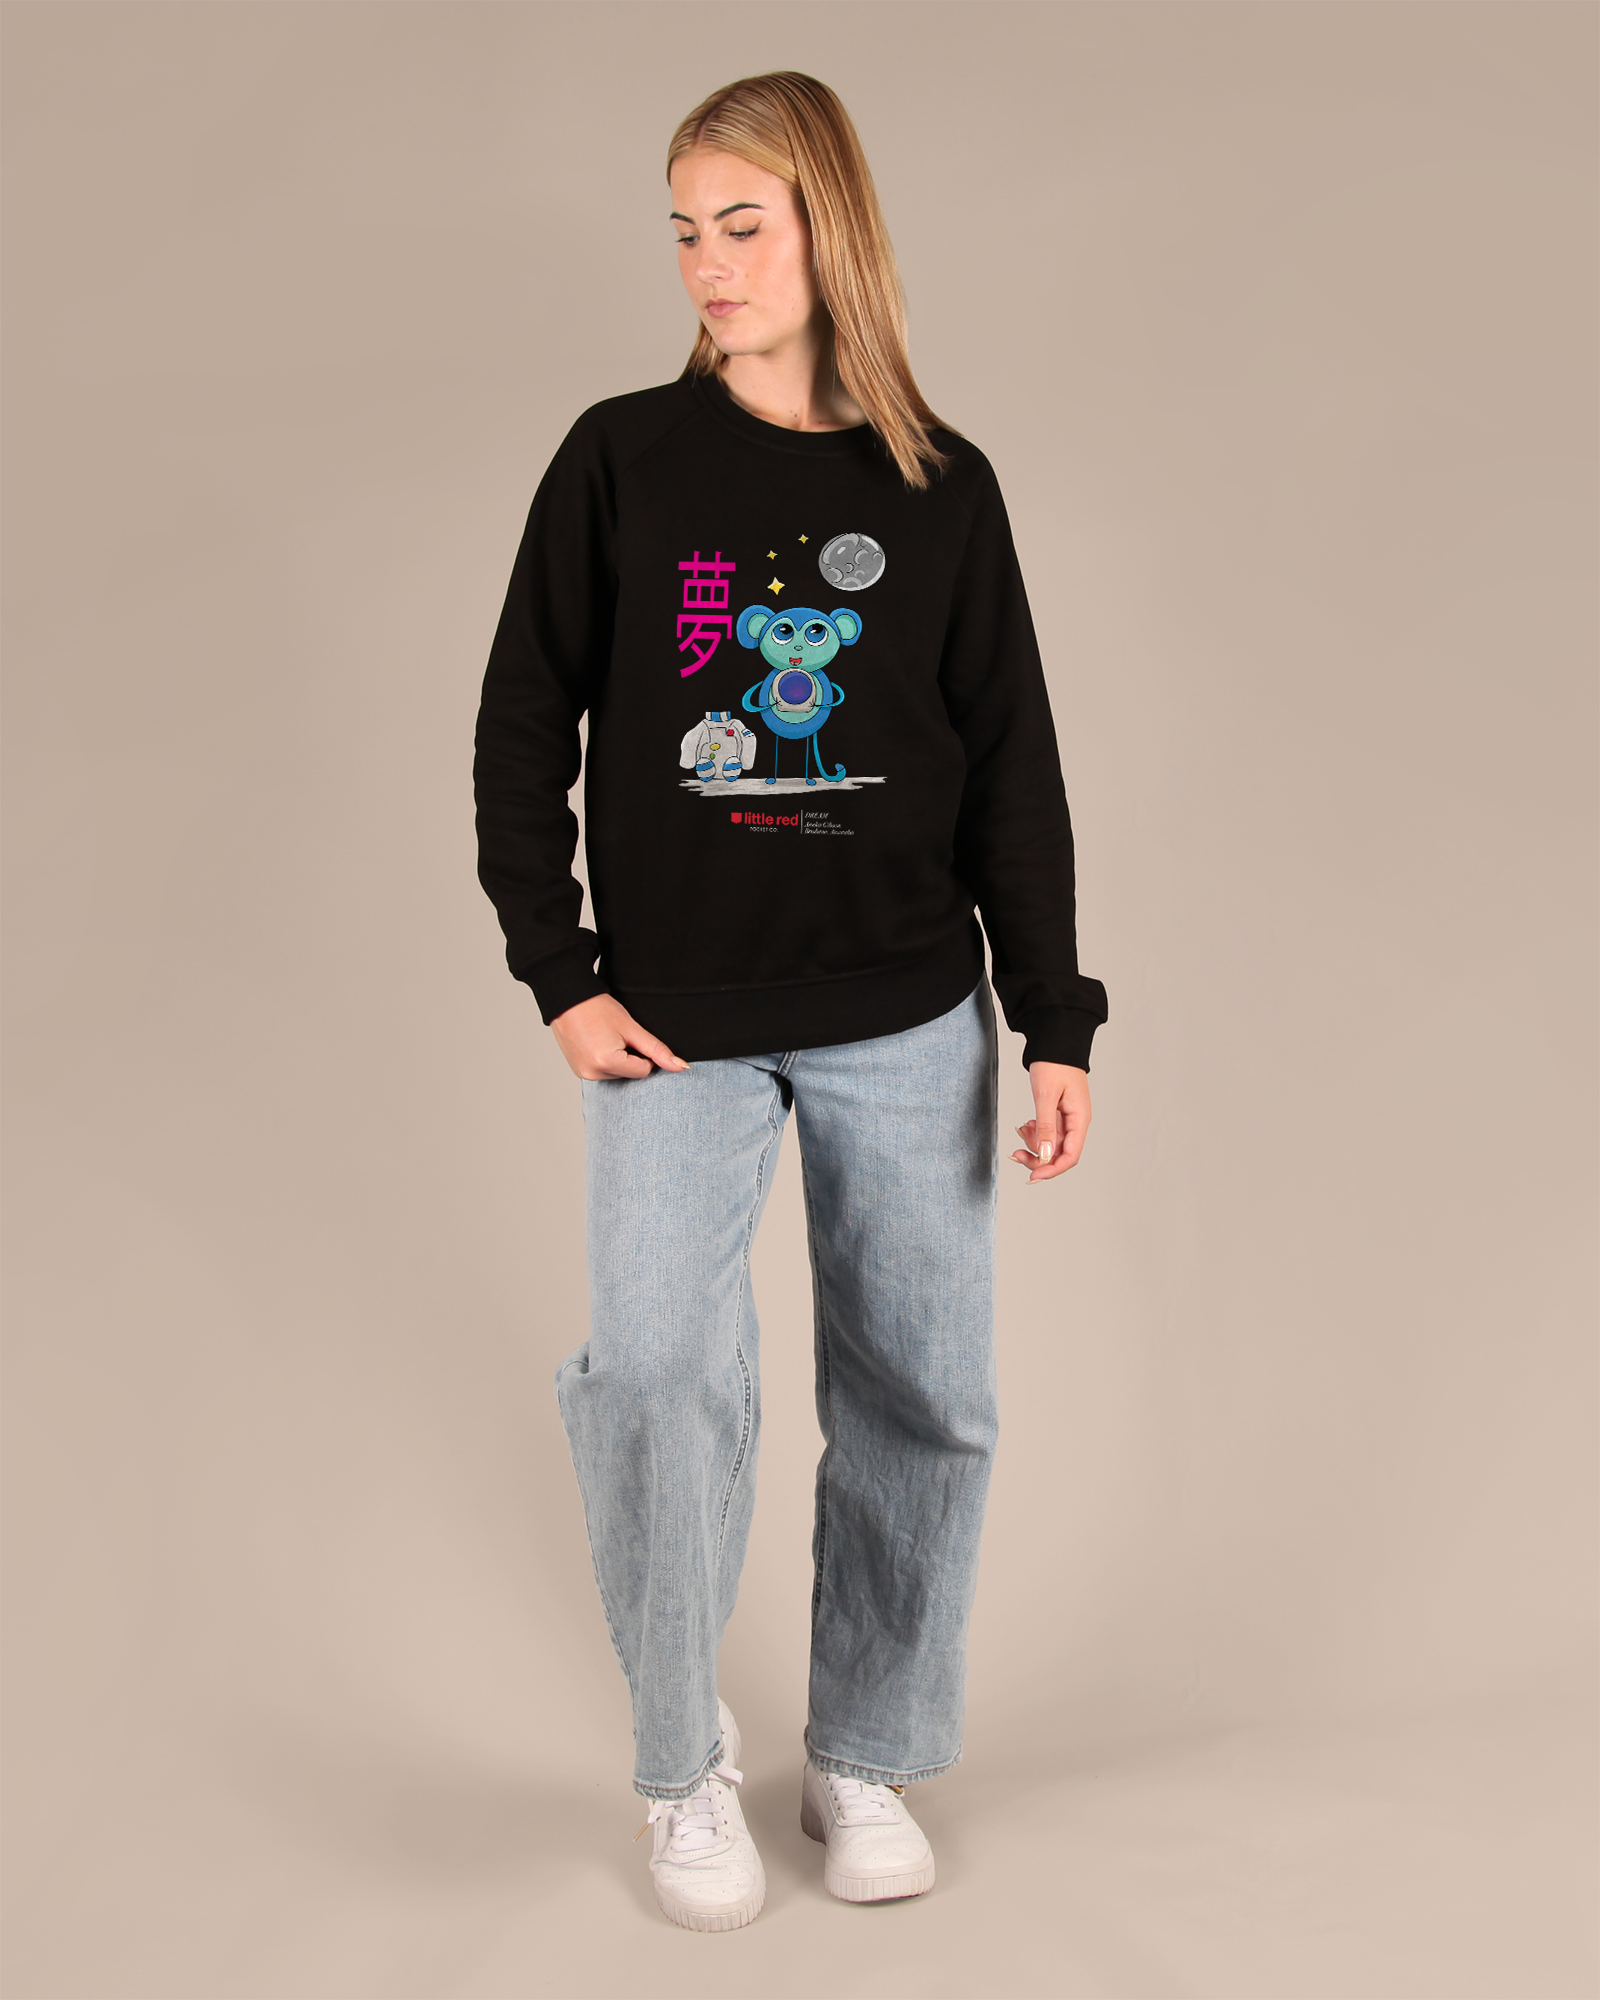 "Dream" Female Crewneck Sweater - Apricot